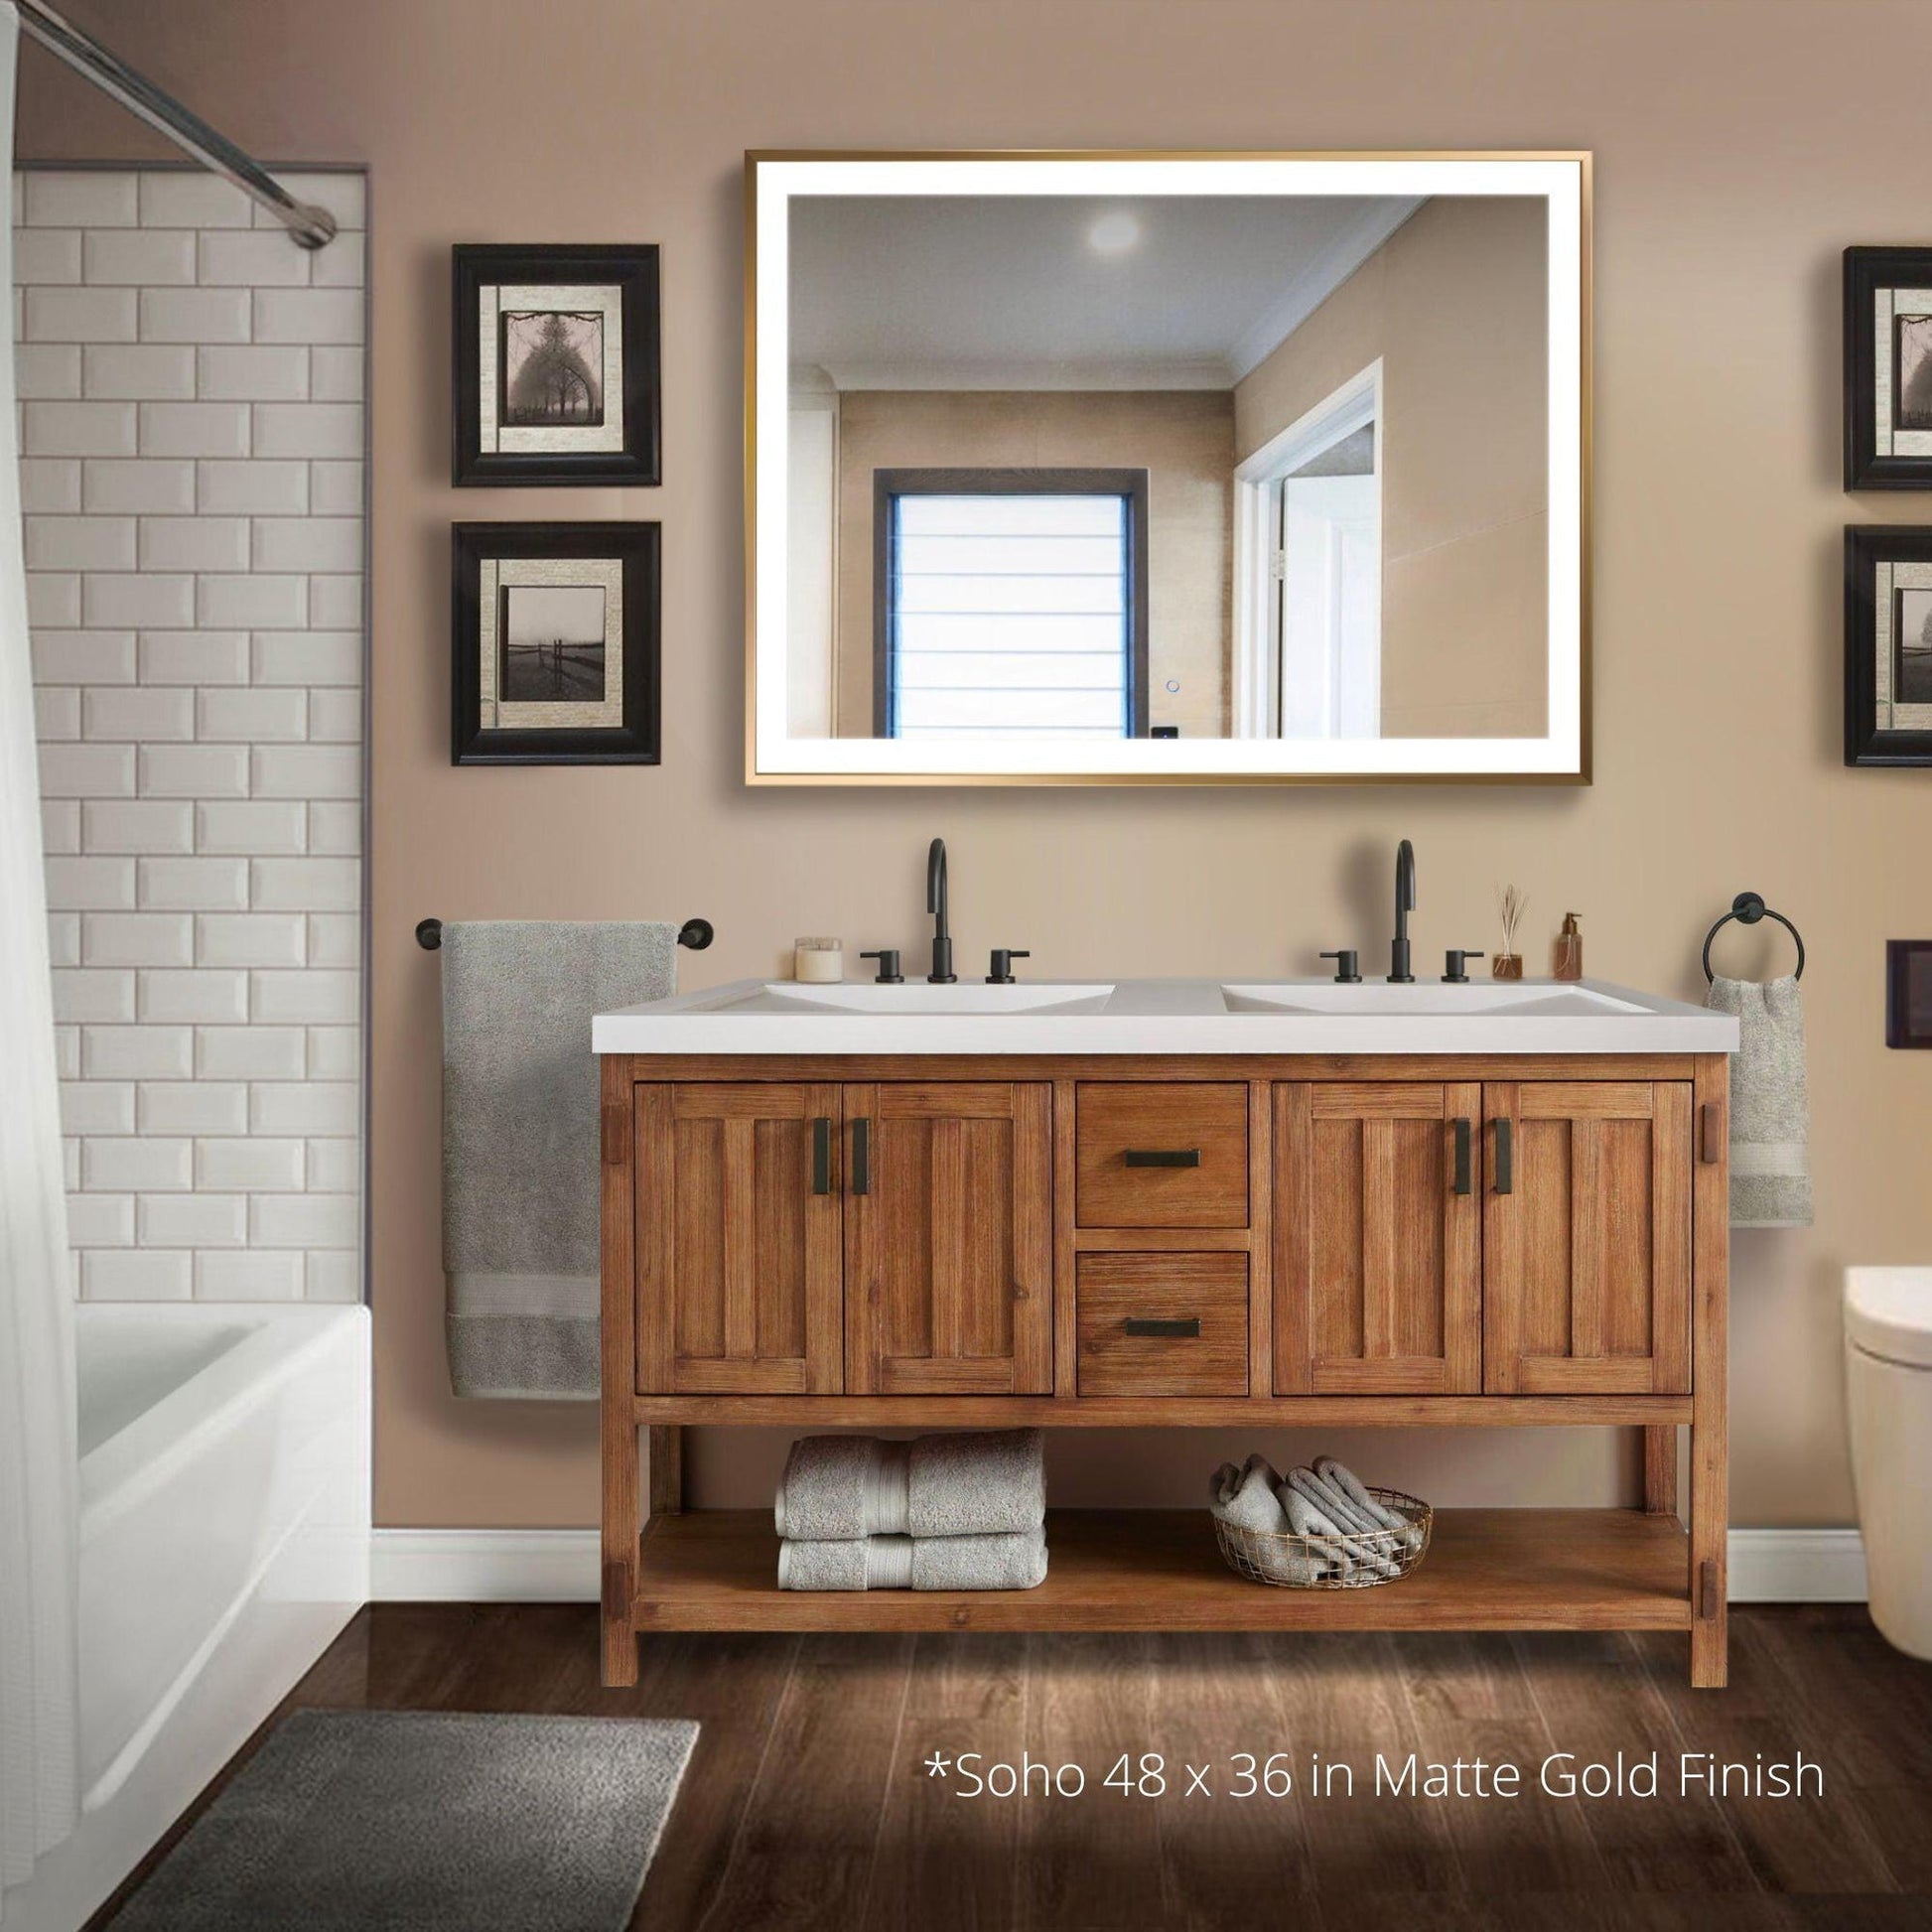 Krugg Reflections Soho 48" x 36" 5000K Rectangular Matte Black Wall-Mounted Framed LED Bathroom Vanity Mirror With Built-in Defogger and Dimmer